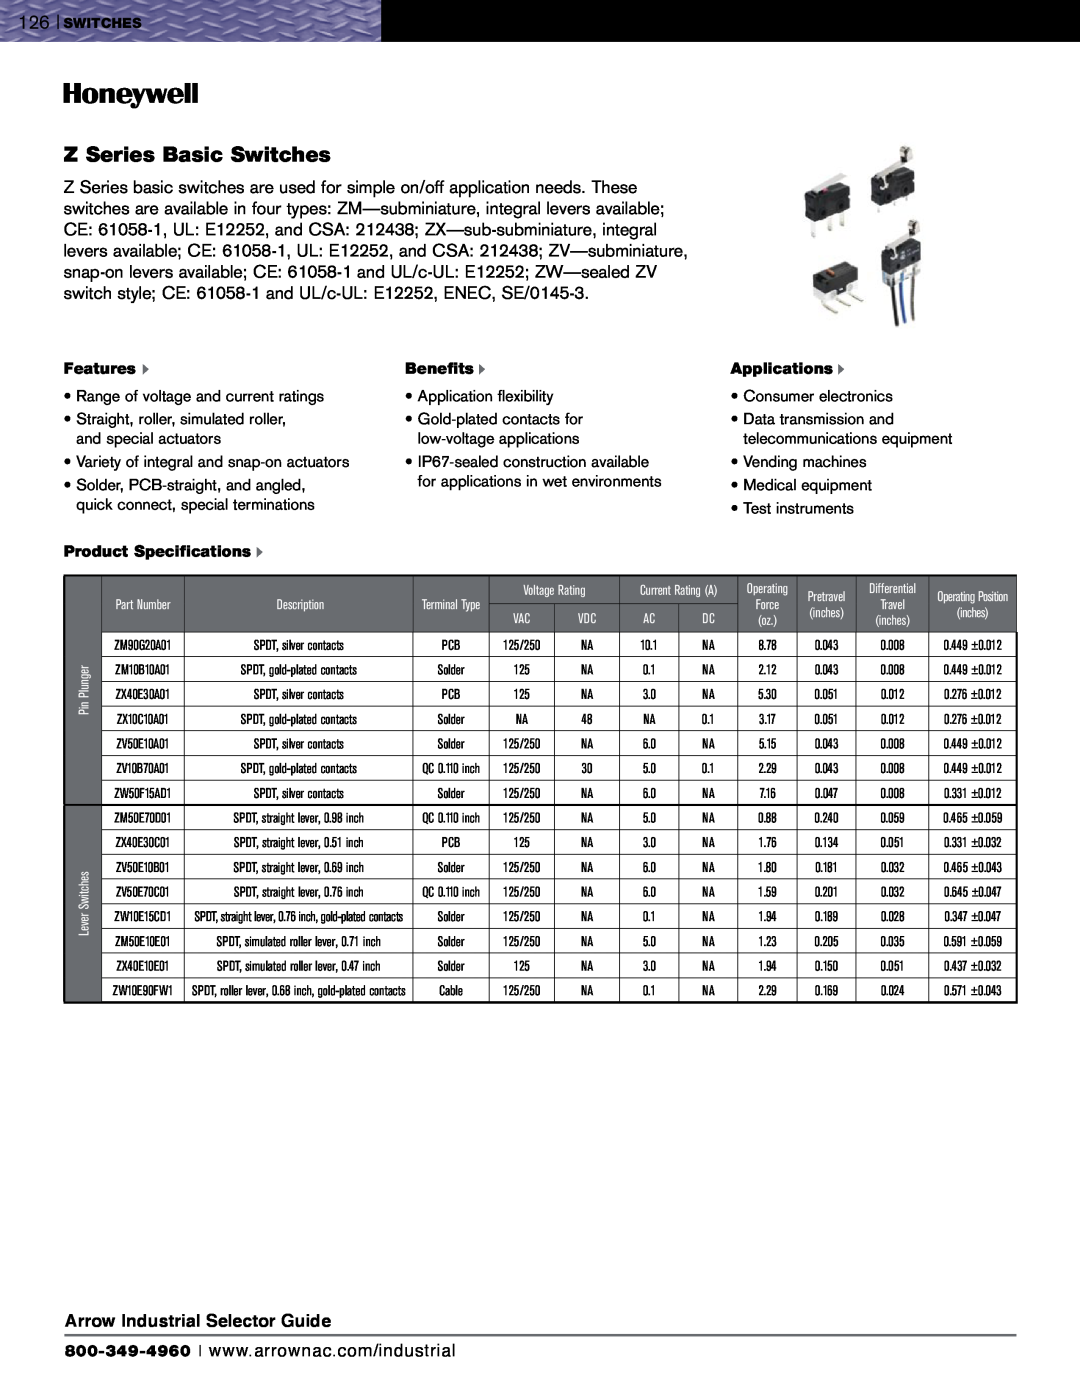 Honeywell EVN2000 Series Z Series Basic Switches, Arrow Industrial Selector Guide, Features u, Benefits u, Applications u 